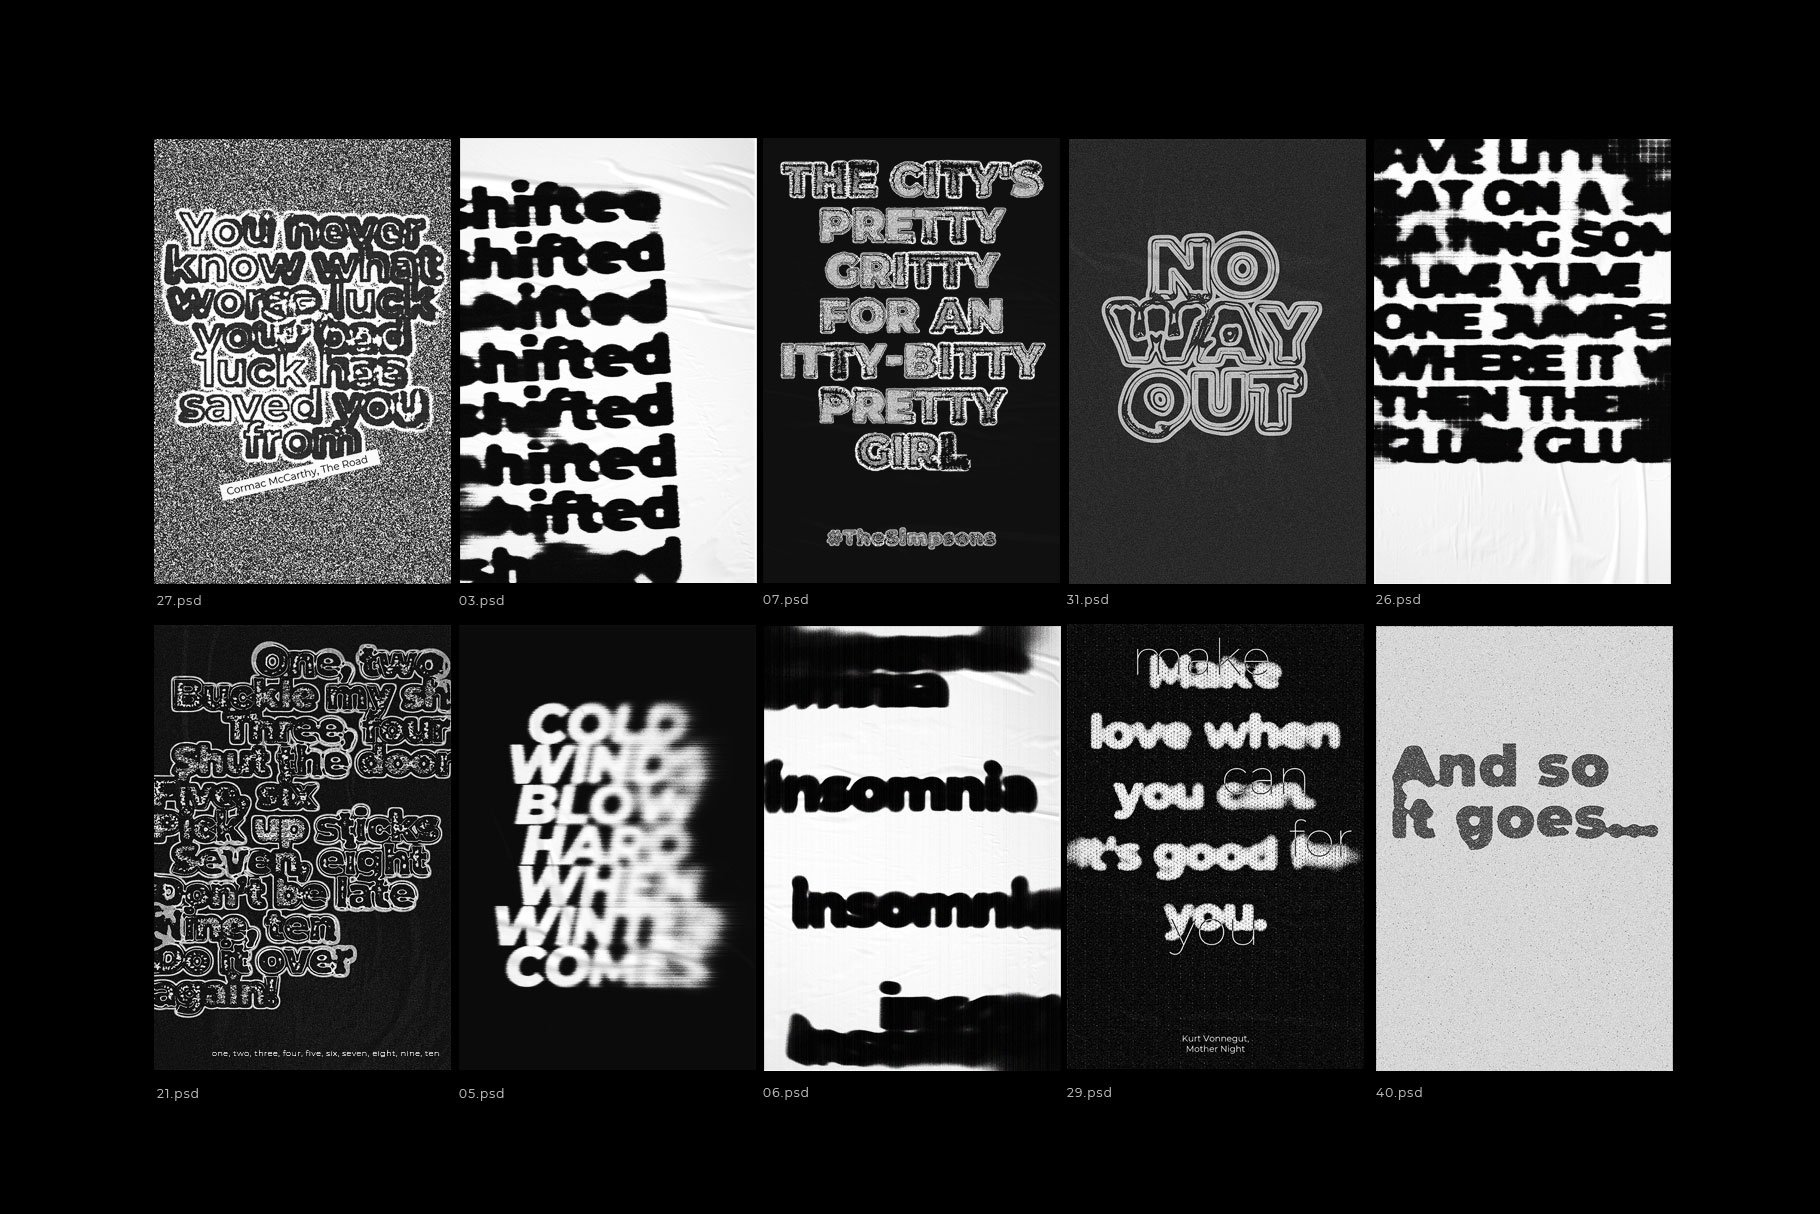 Inartflow 40种艺术抽象失真故障扭曲印刷艺术海报设计复古文字效果 40 Photoshop Text Effects Vol.2 图片素材 第7张